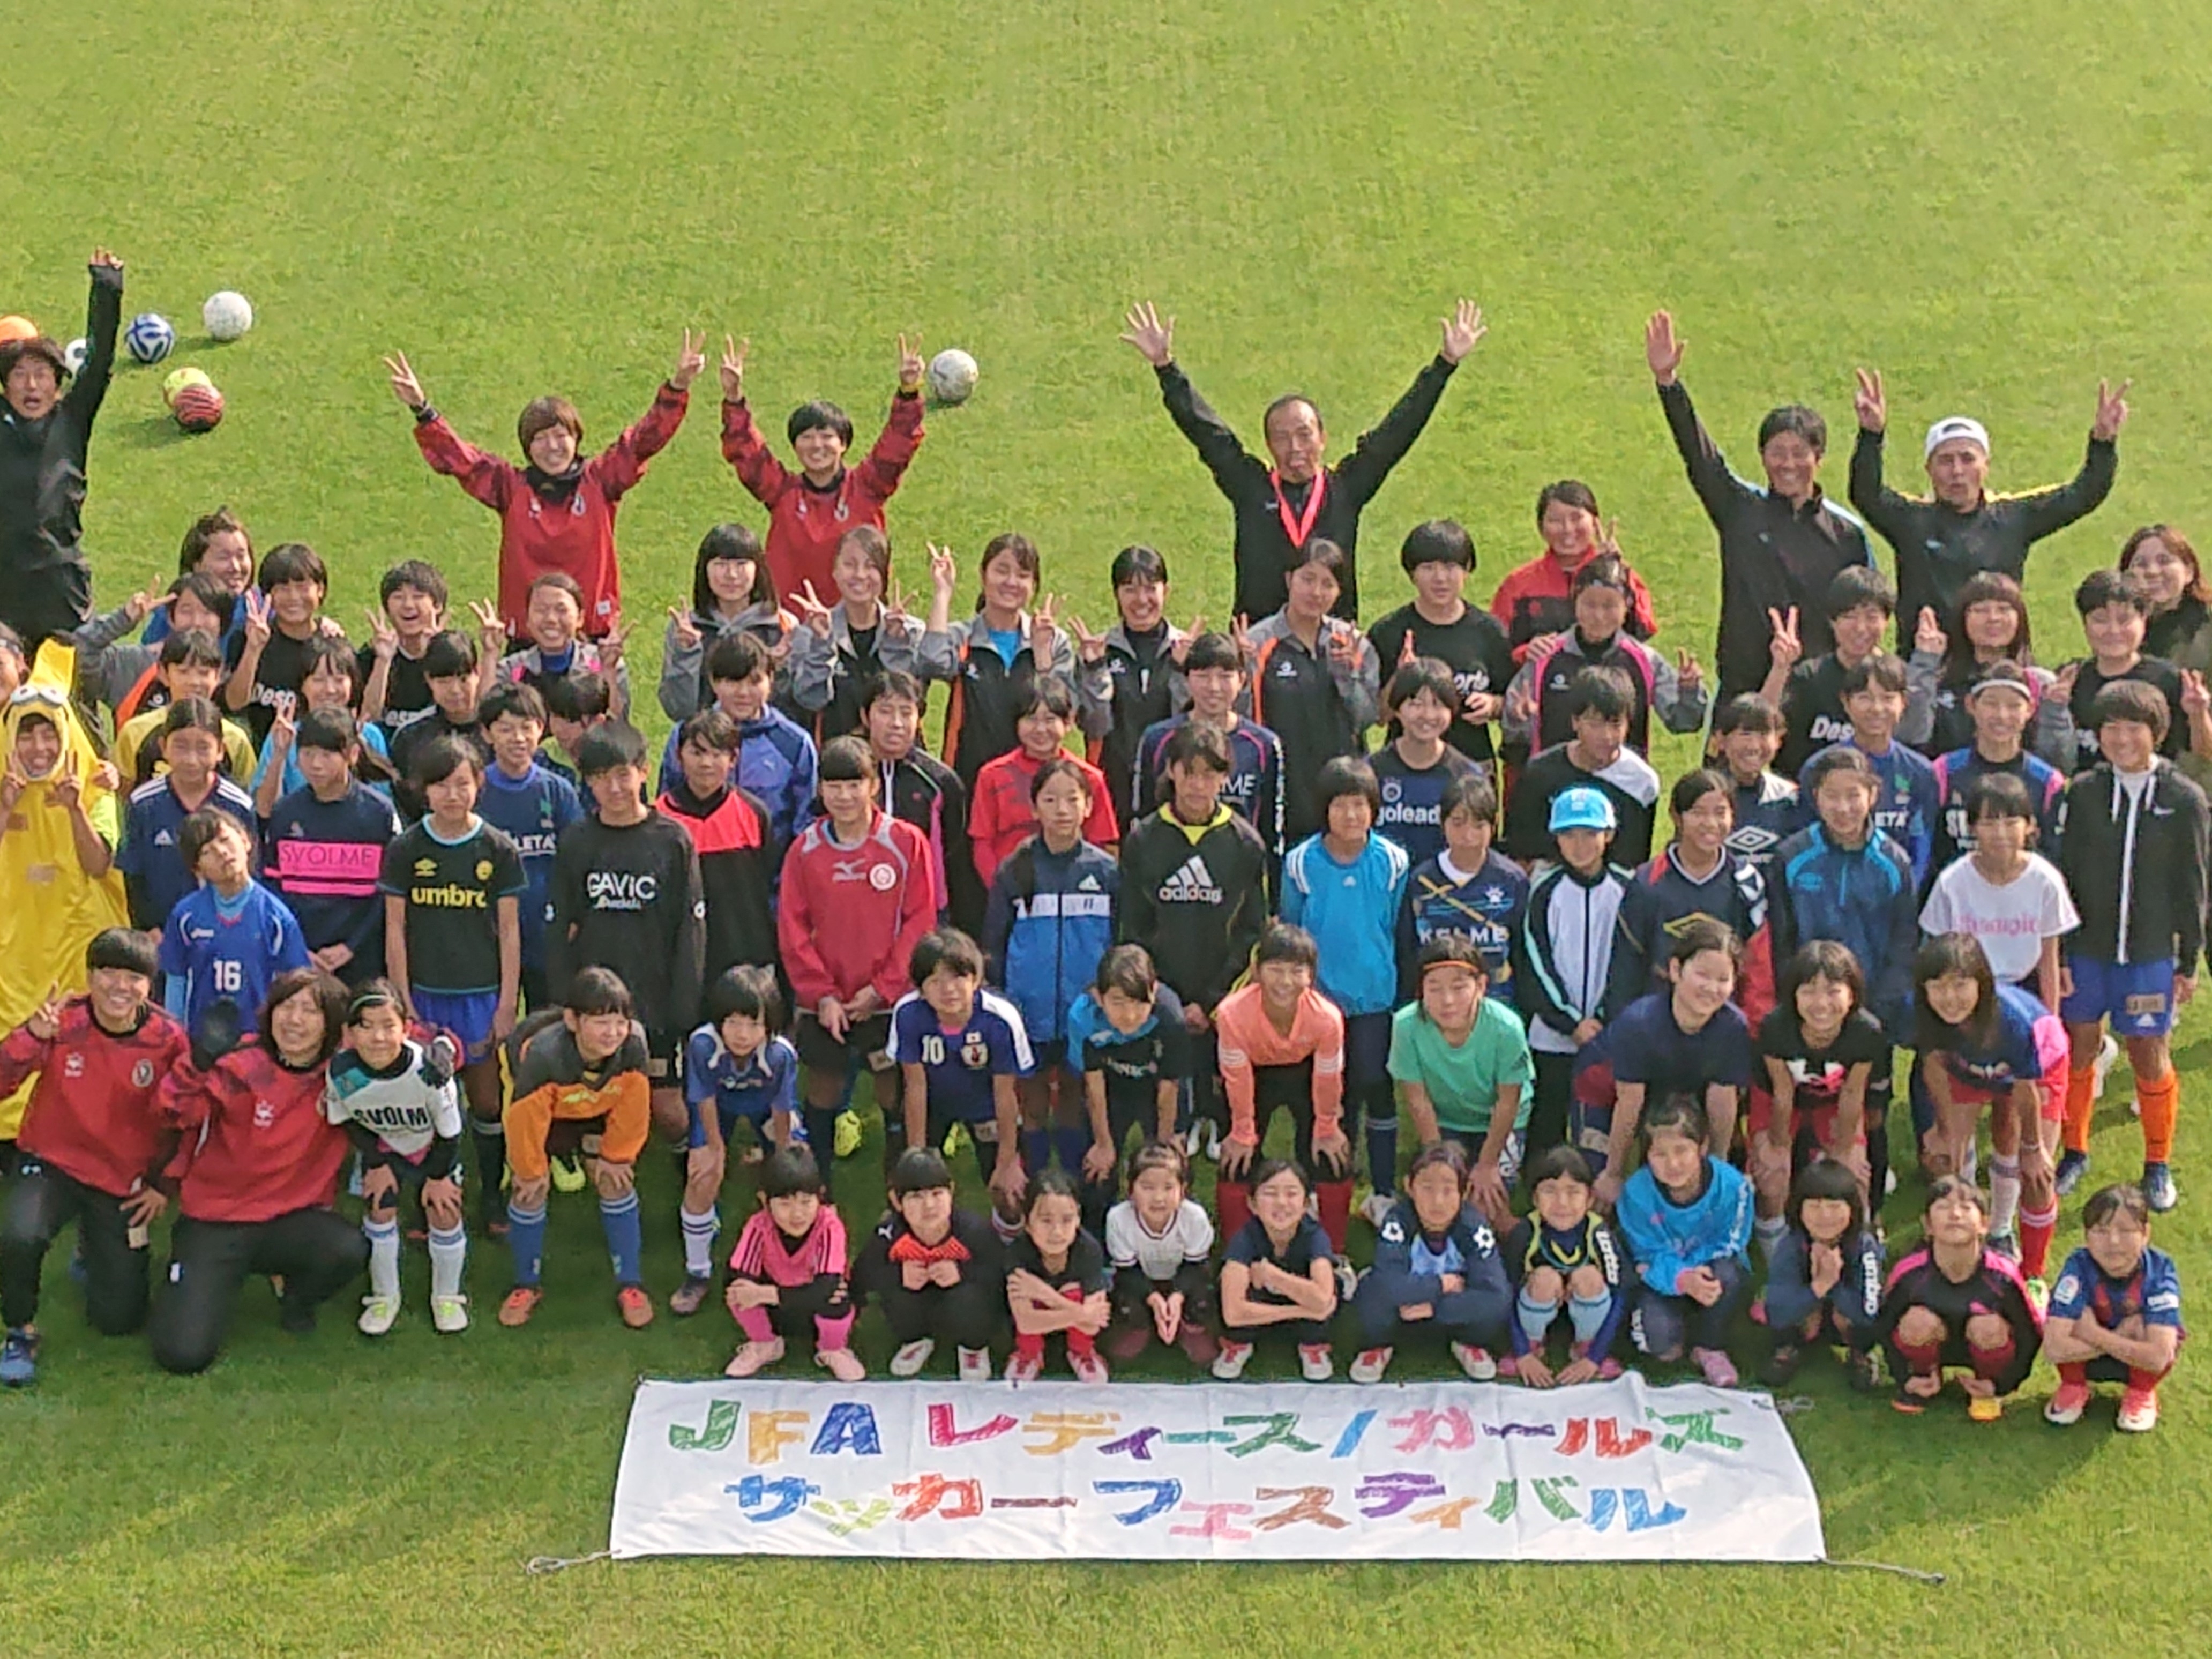 JFAガールズサッカーフェスティバル 高知県高知市の春野総合運動公園多目的広場に53人が参加！